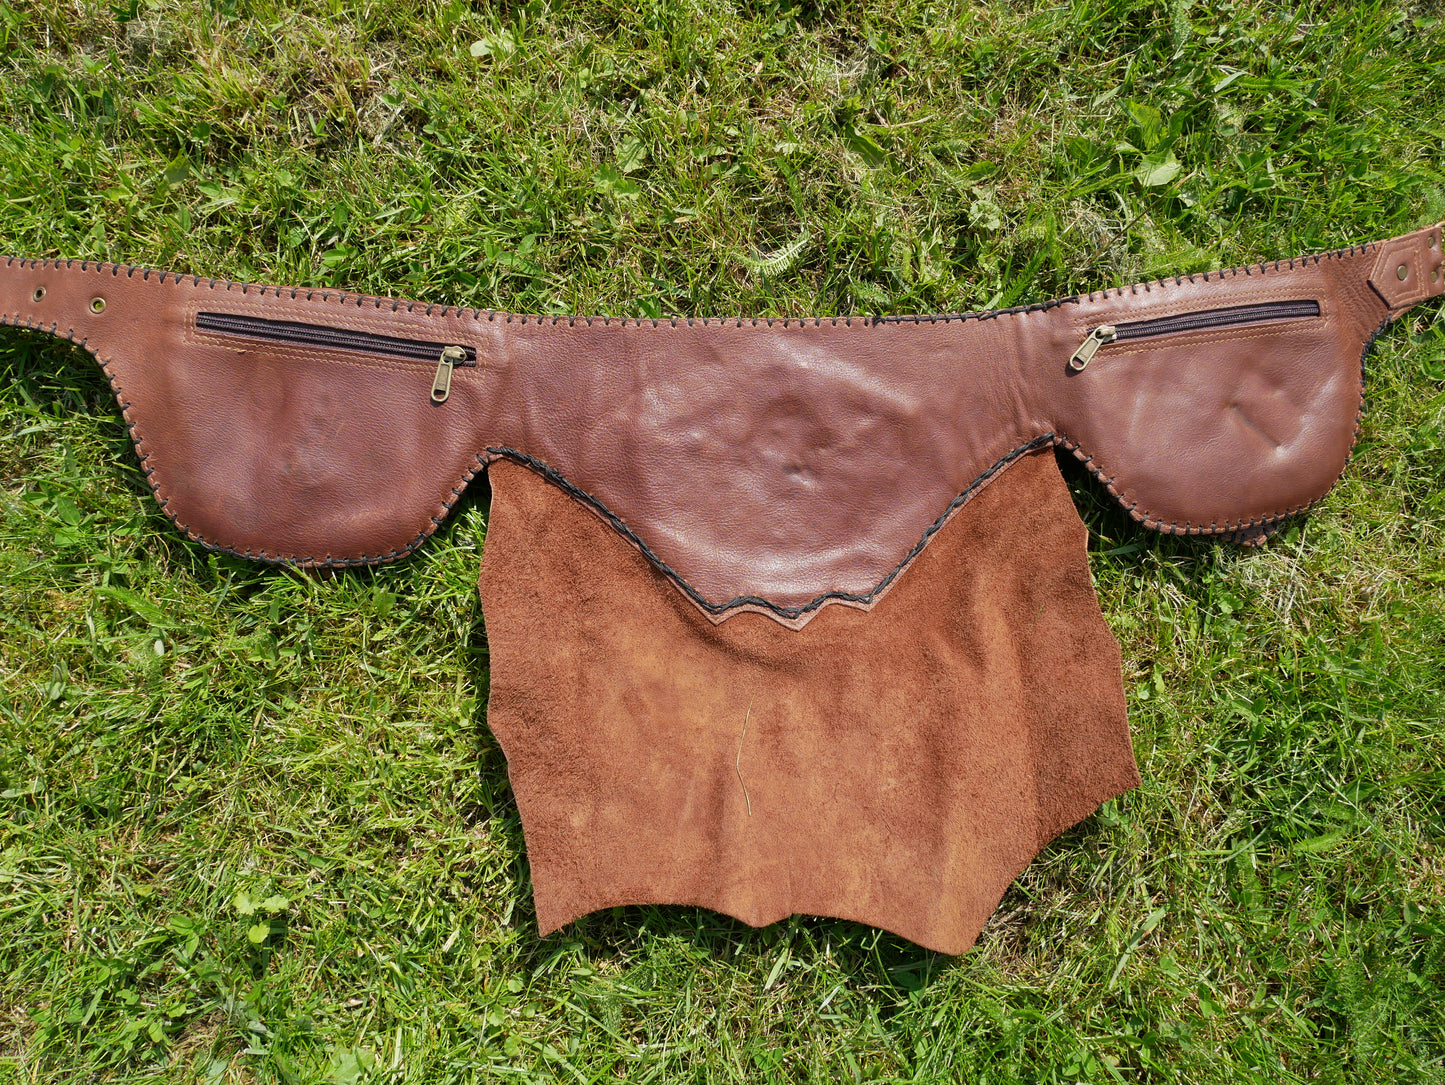 Unique leather belt bag cum skirt - waist bag with Labradorite stone and 2 pockets